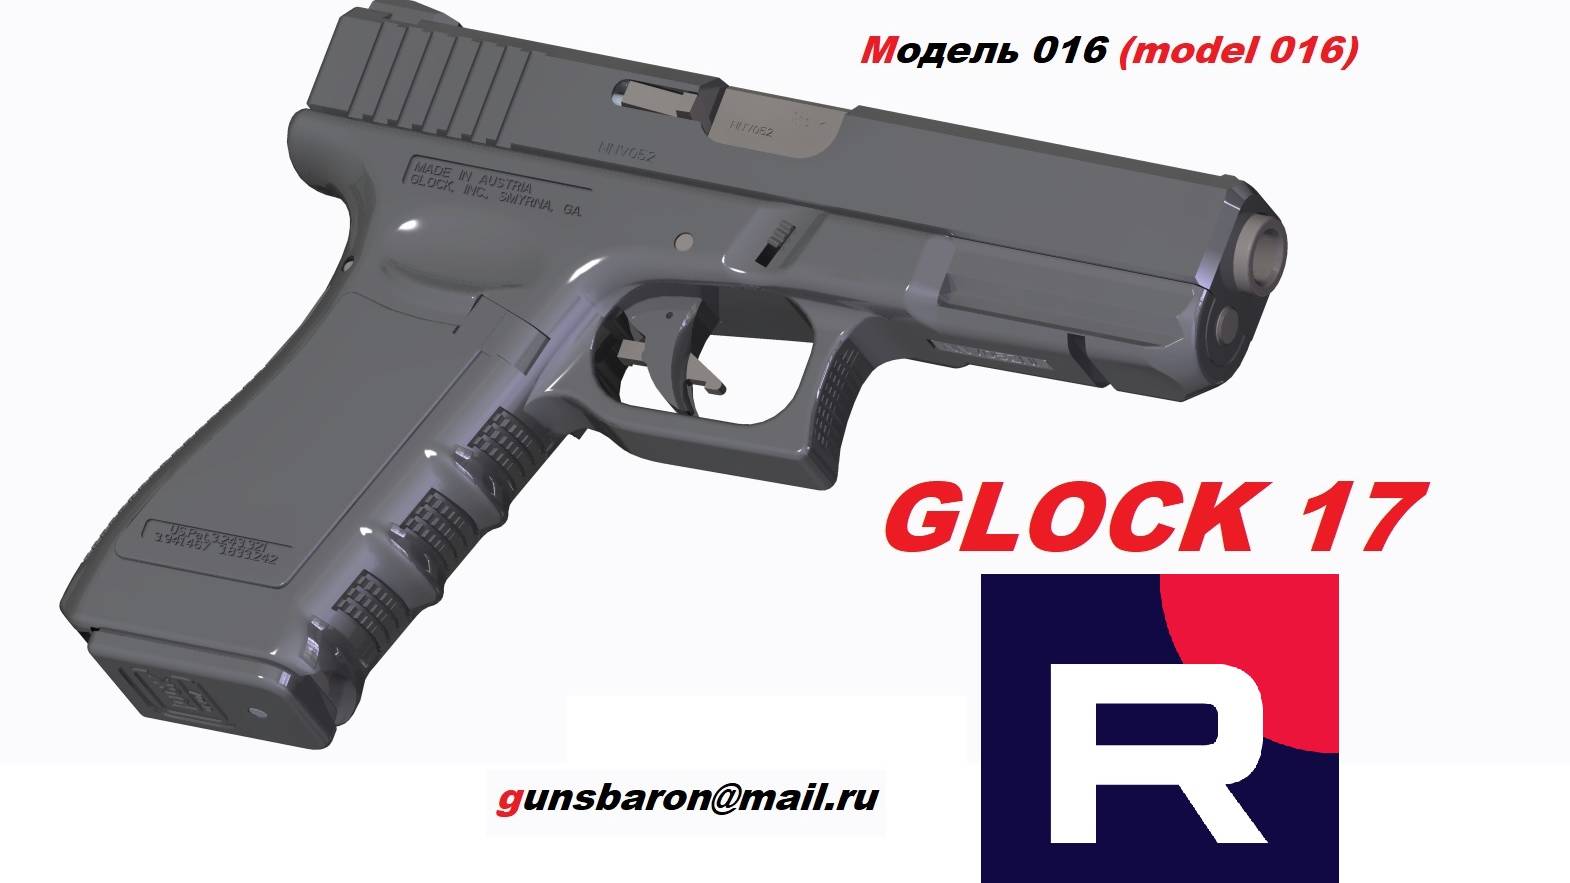 3D Model Glock17. Triotec. Модель 016